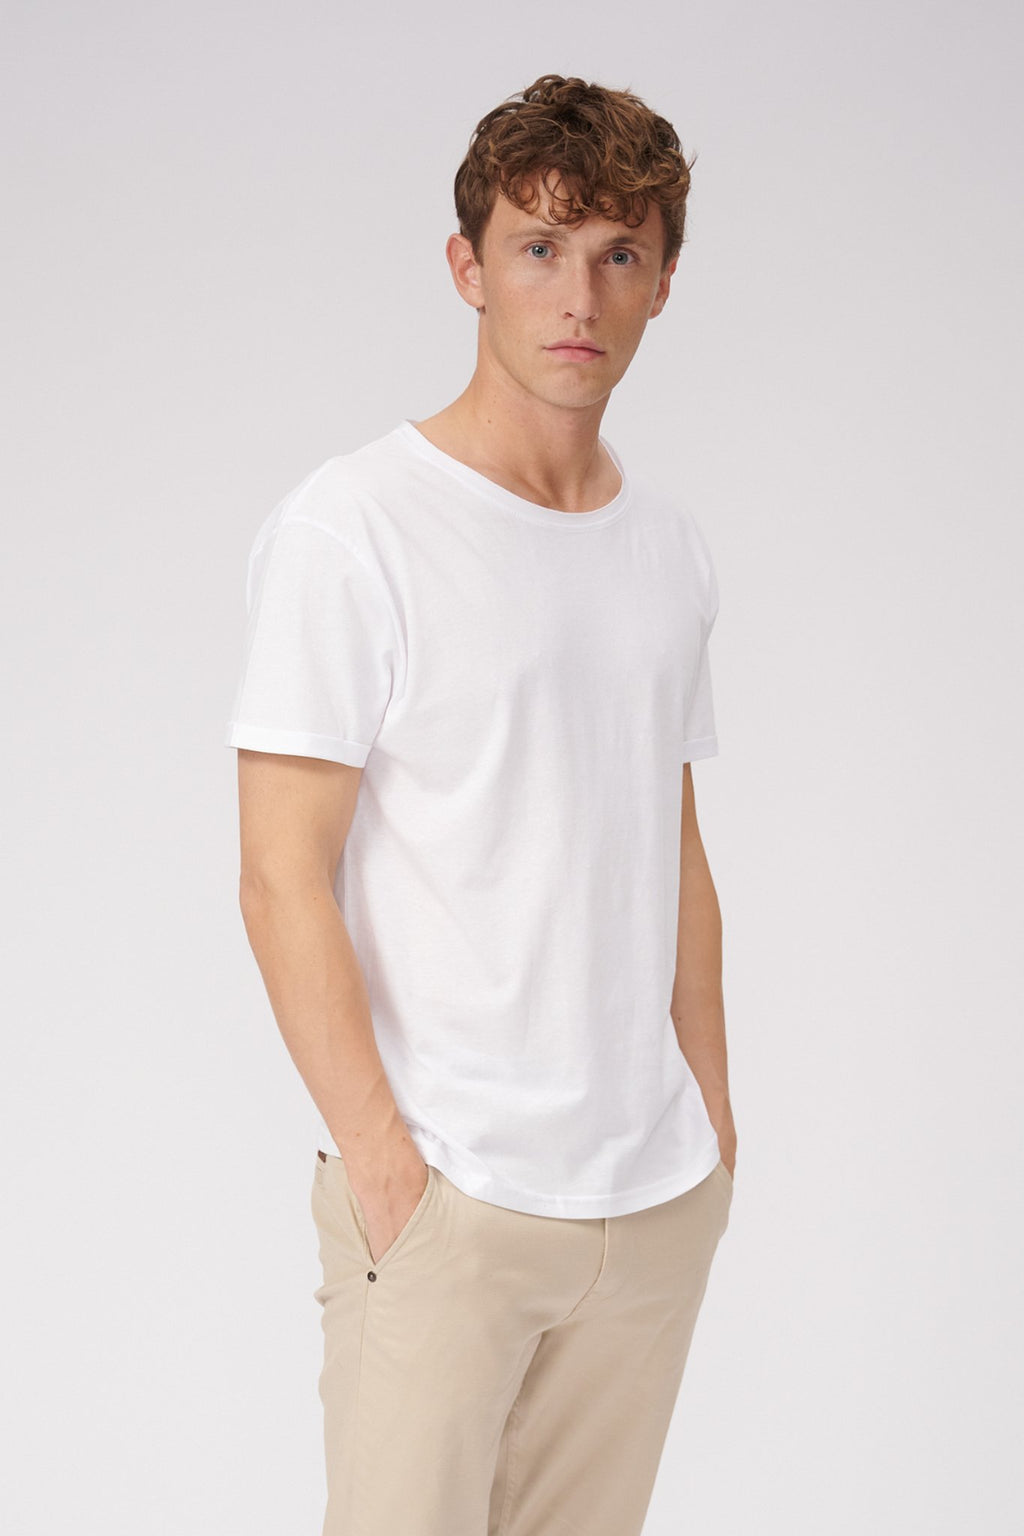 Camiseta de cuello crudo - blanco